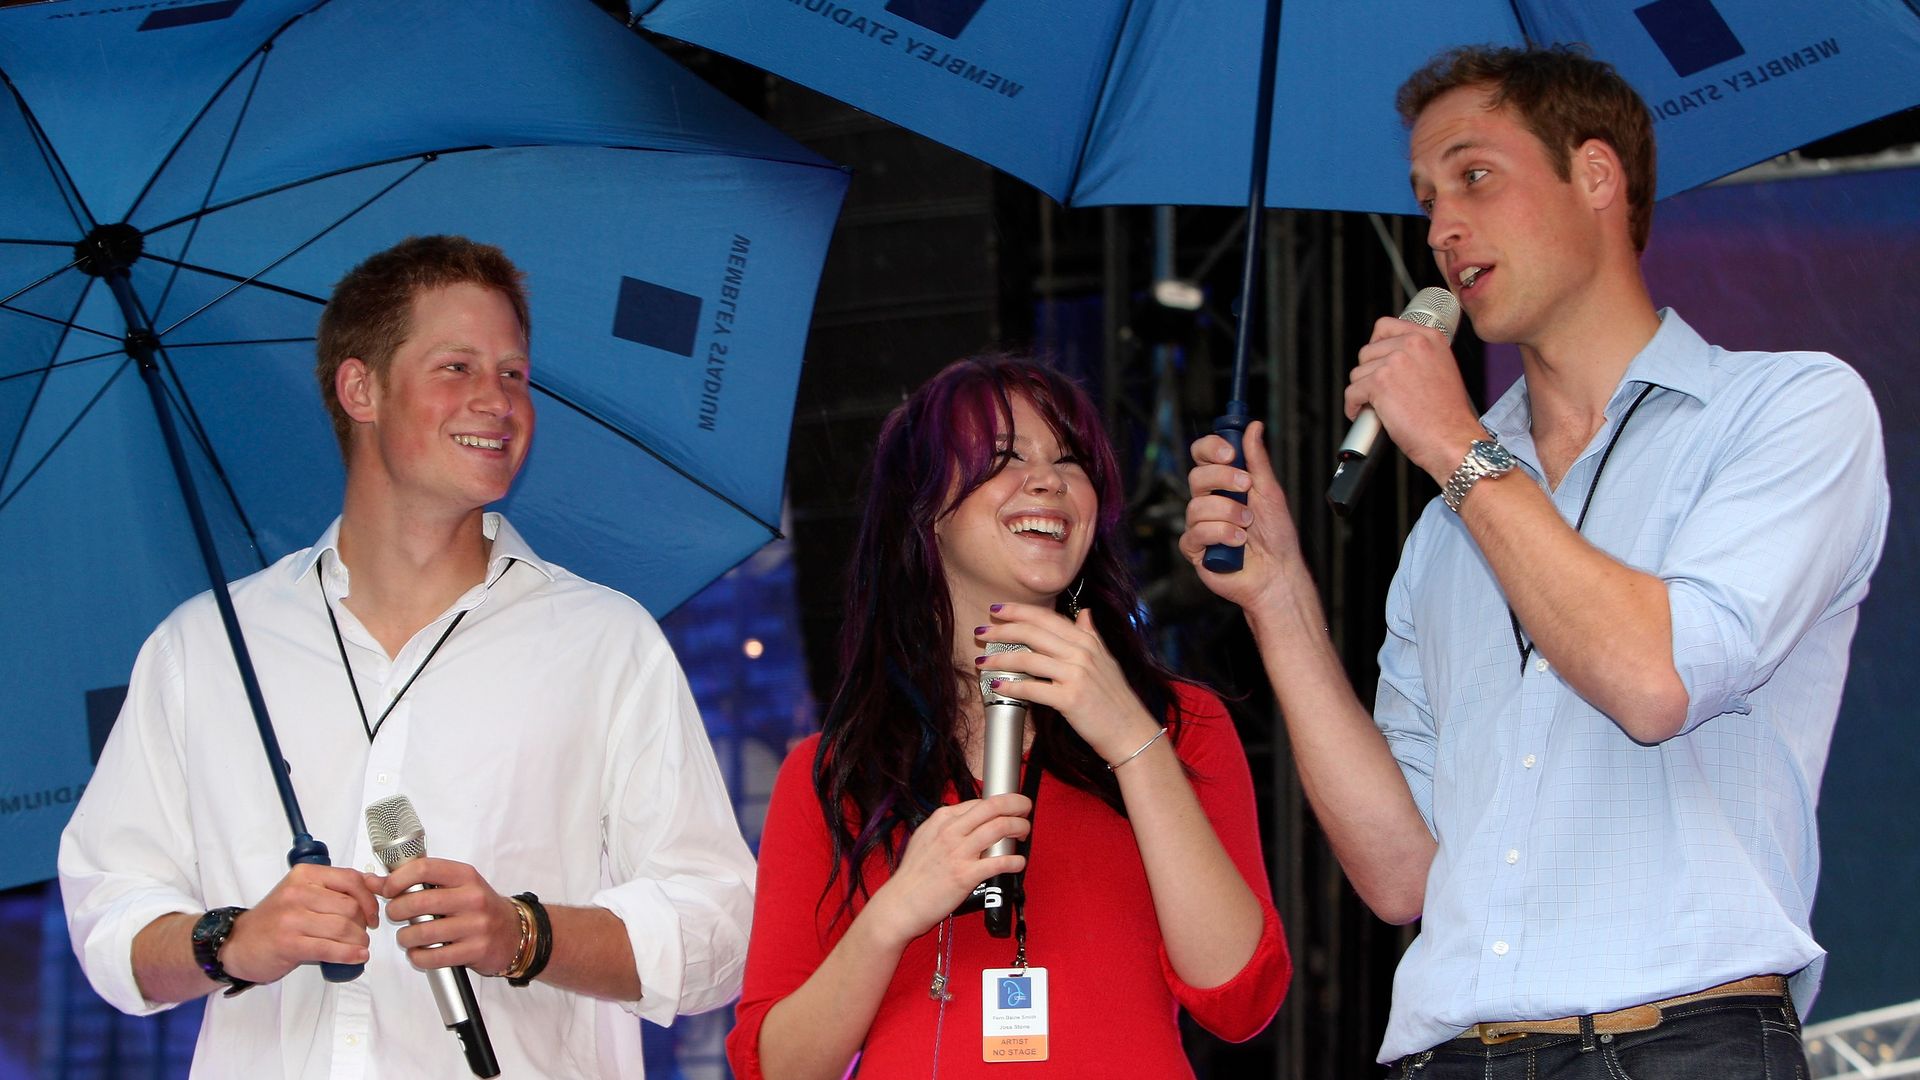 Prince Harry, Joss Stone and Prince William underneath umbrellas